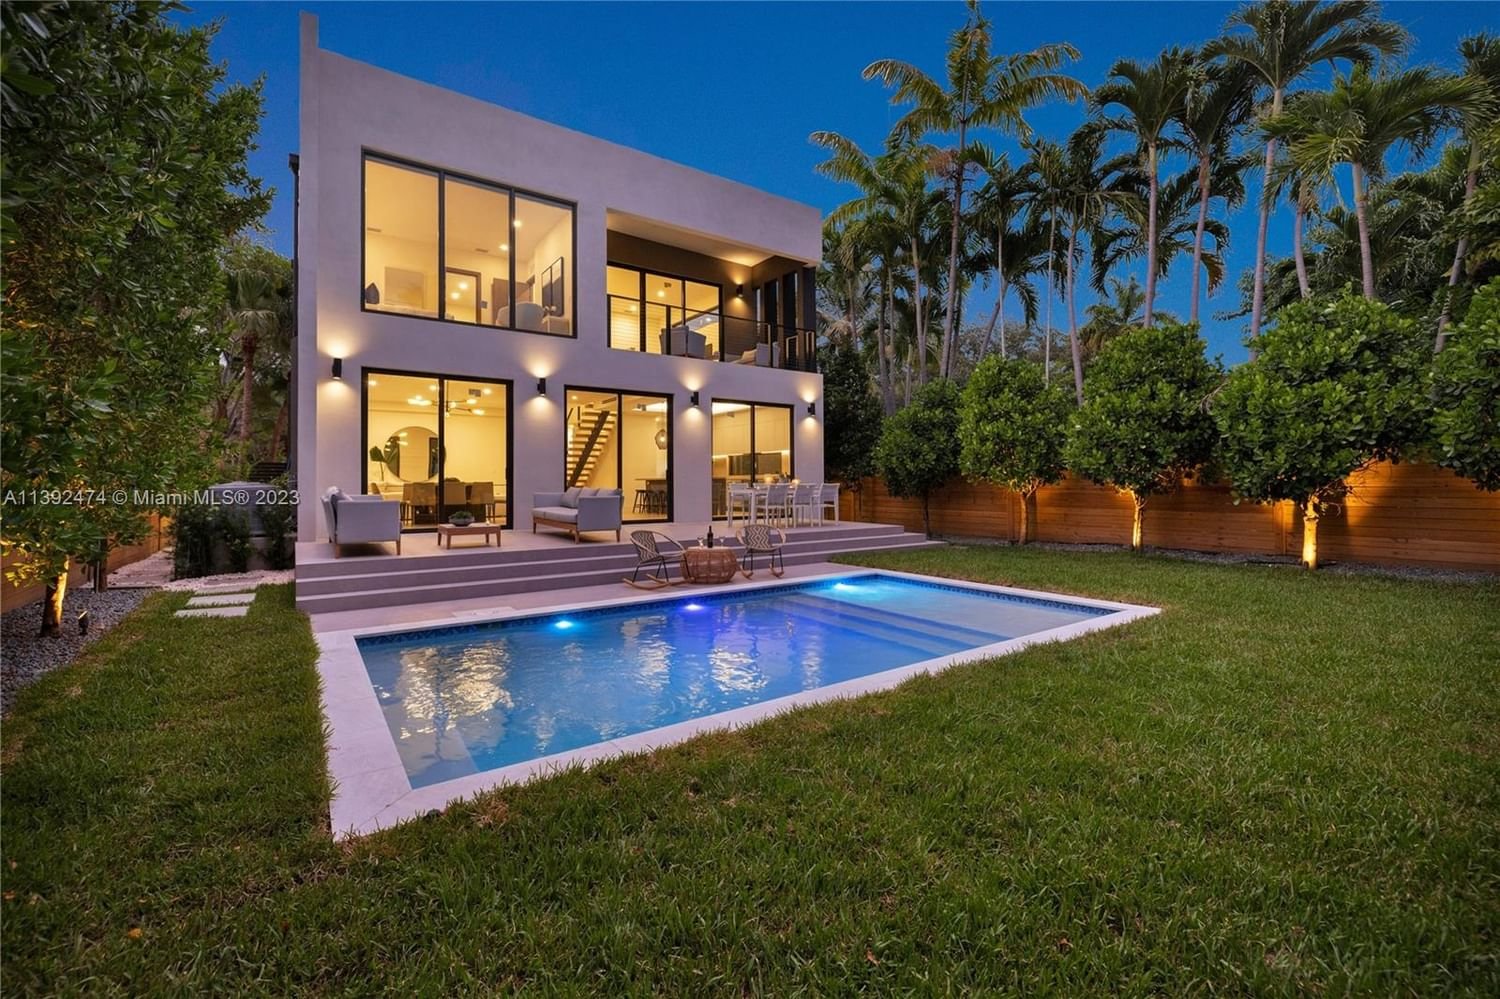 Real estate property located at 766 72 Ter, Miami-Dade County, Miami, FL